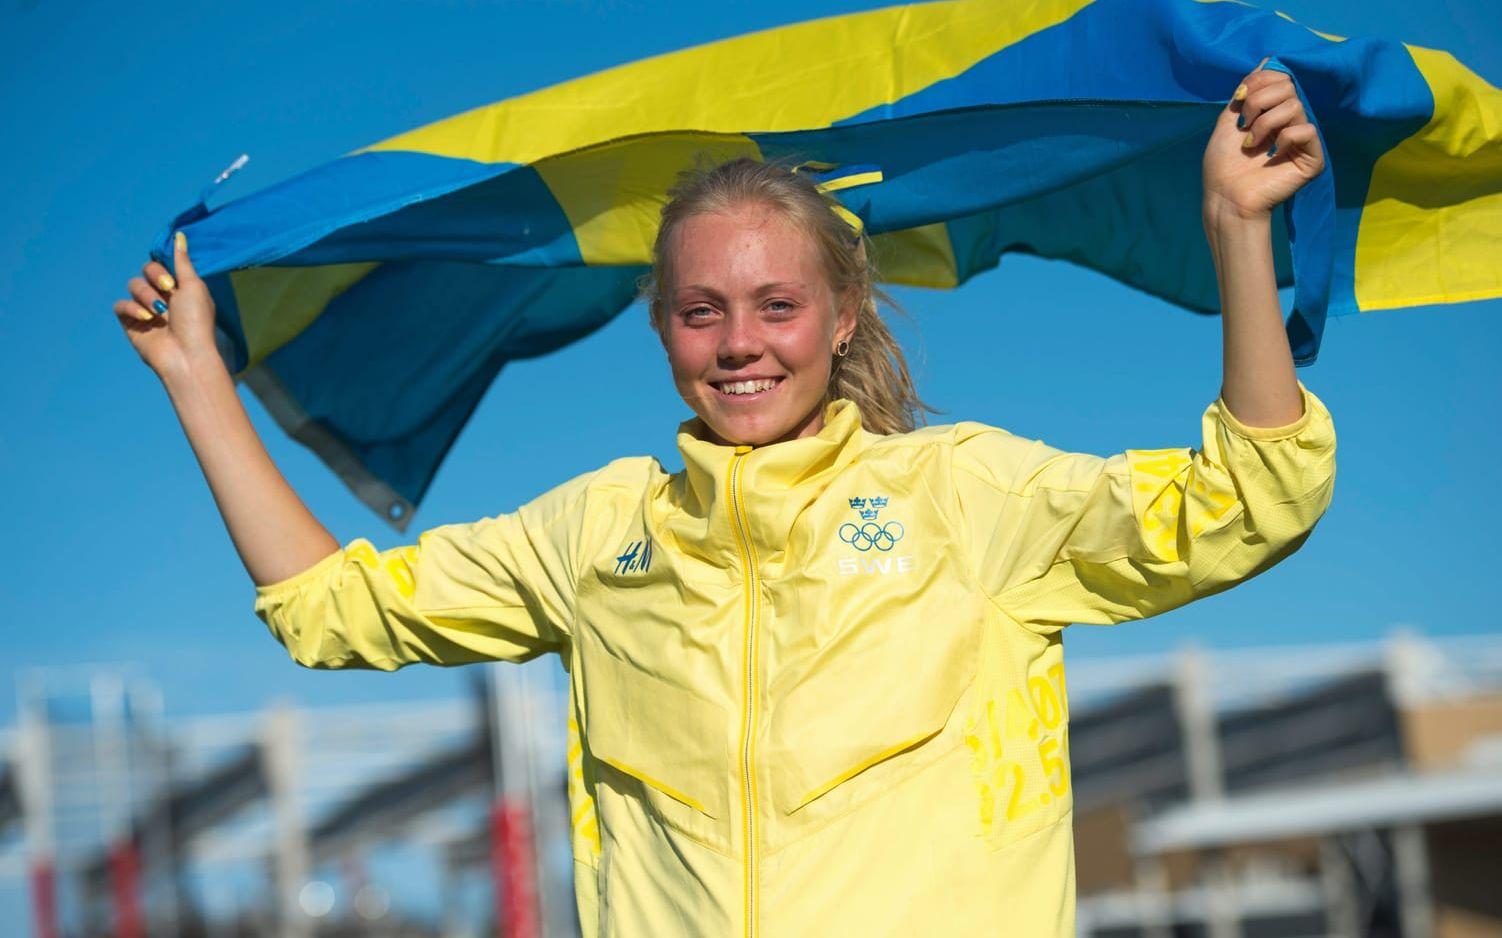 Ungdoms-OS. Tilde Johansson representerar Sverige i Ungdoms-OS som pågår just nu i Györ, Ungern. Bild: Hasse Sjögren/DECA Text&Bild